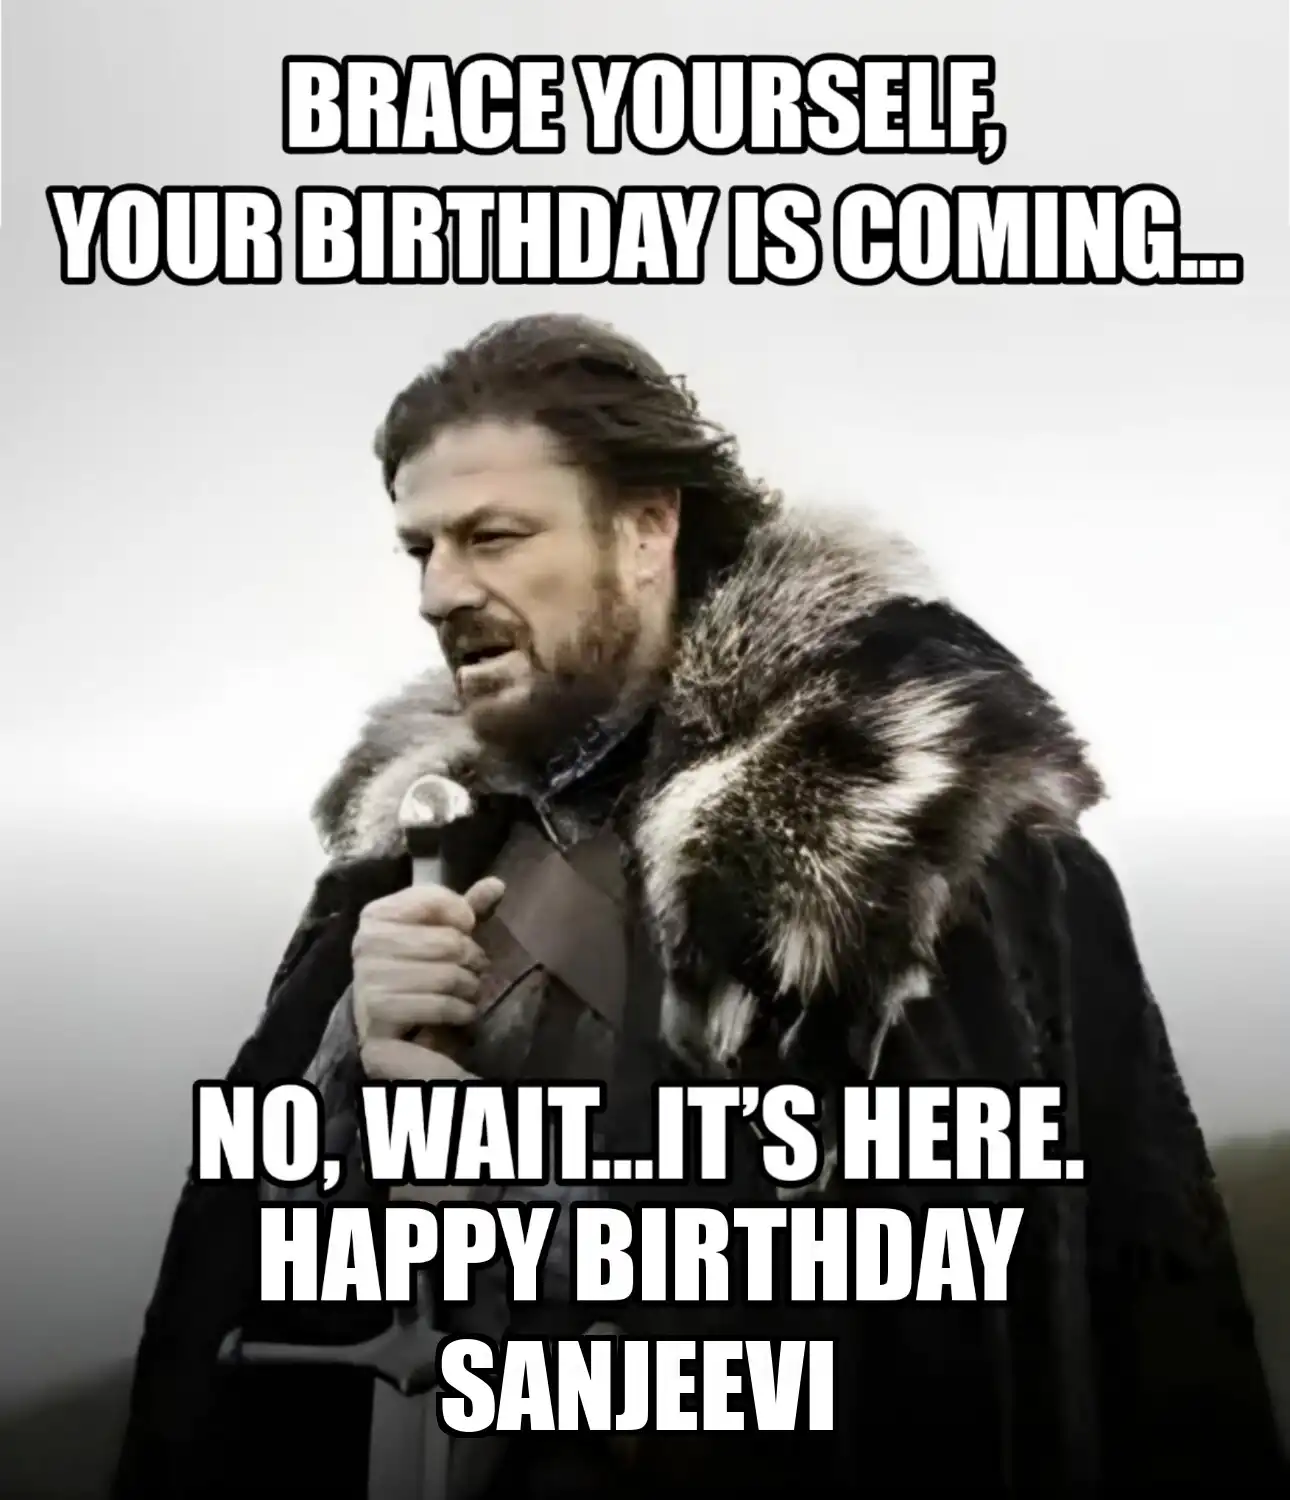 Happy Birthday Sanjeevi Brace Yourself Your Birthday Is Coming Meme